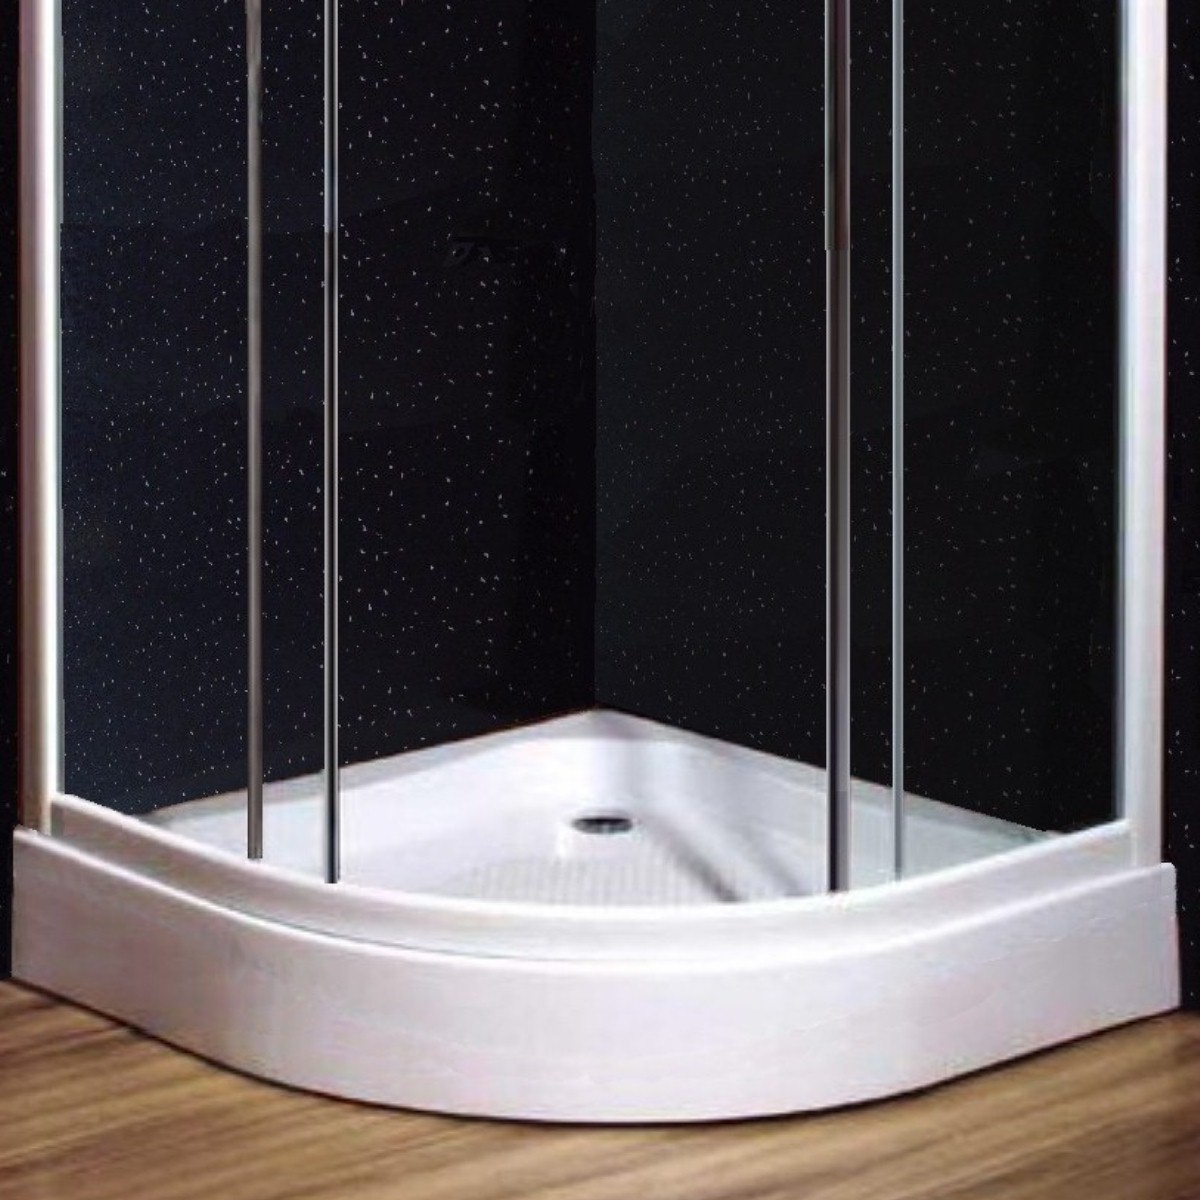 shower panel sparkle effect - Panelling Range